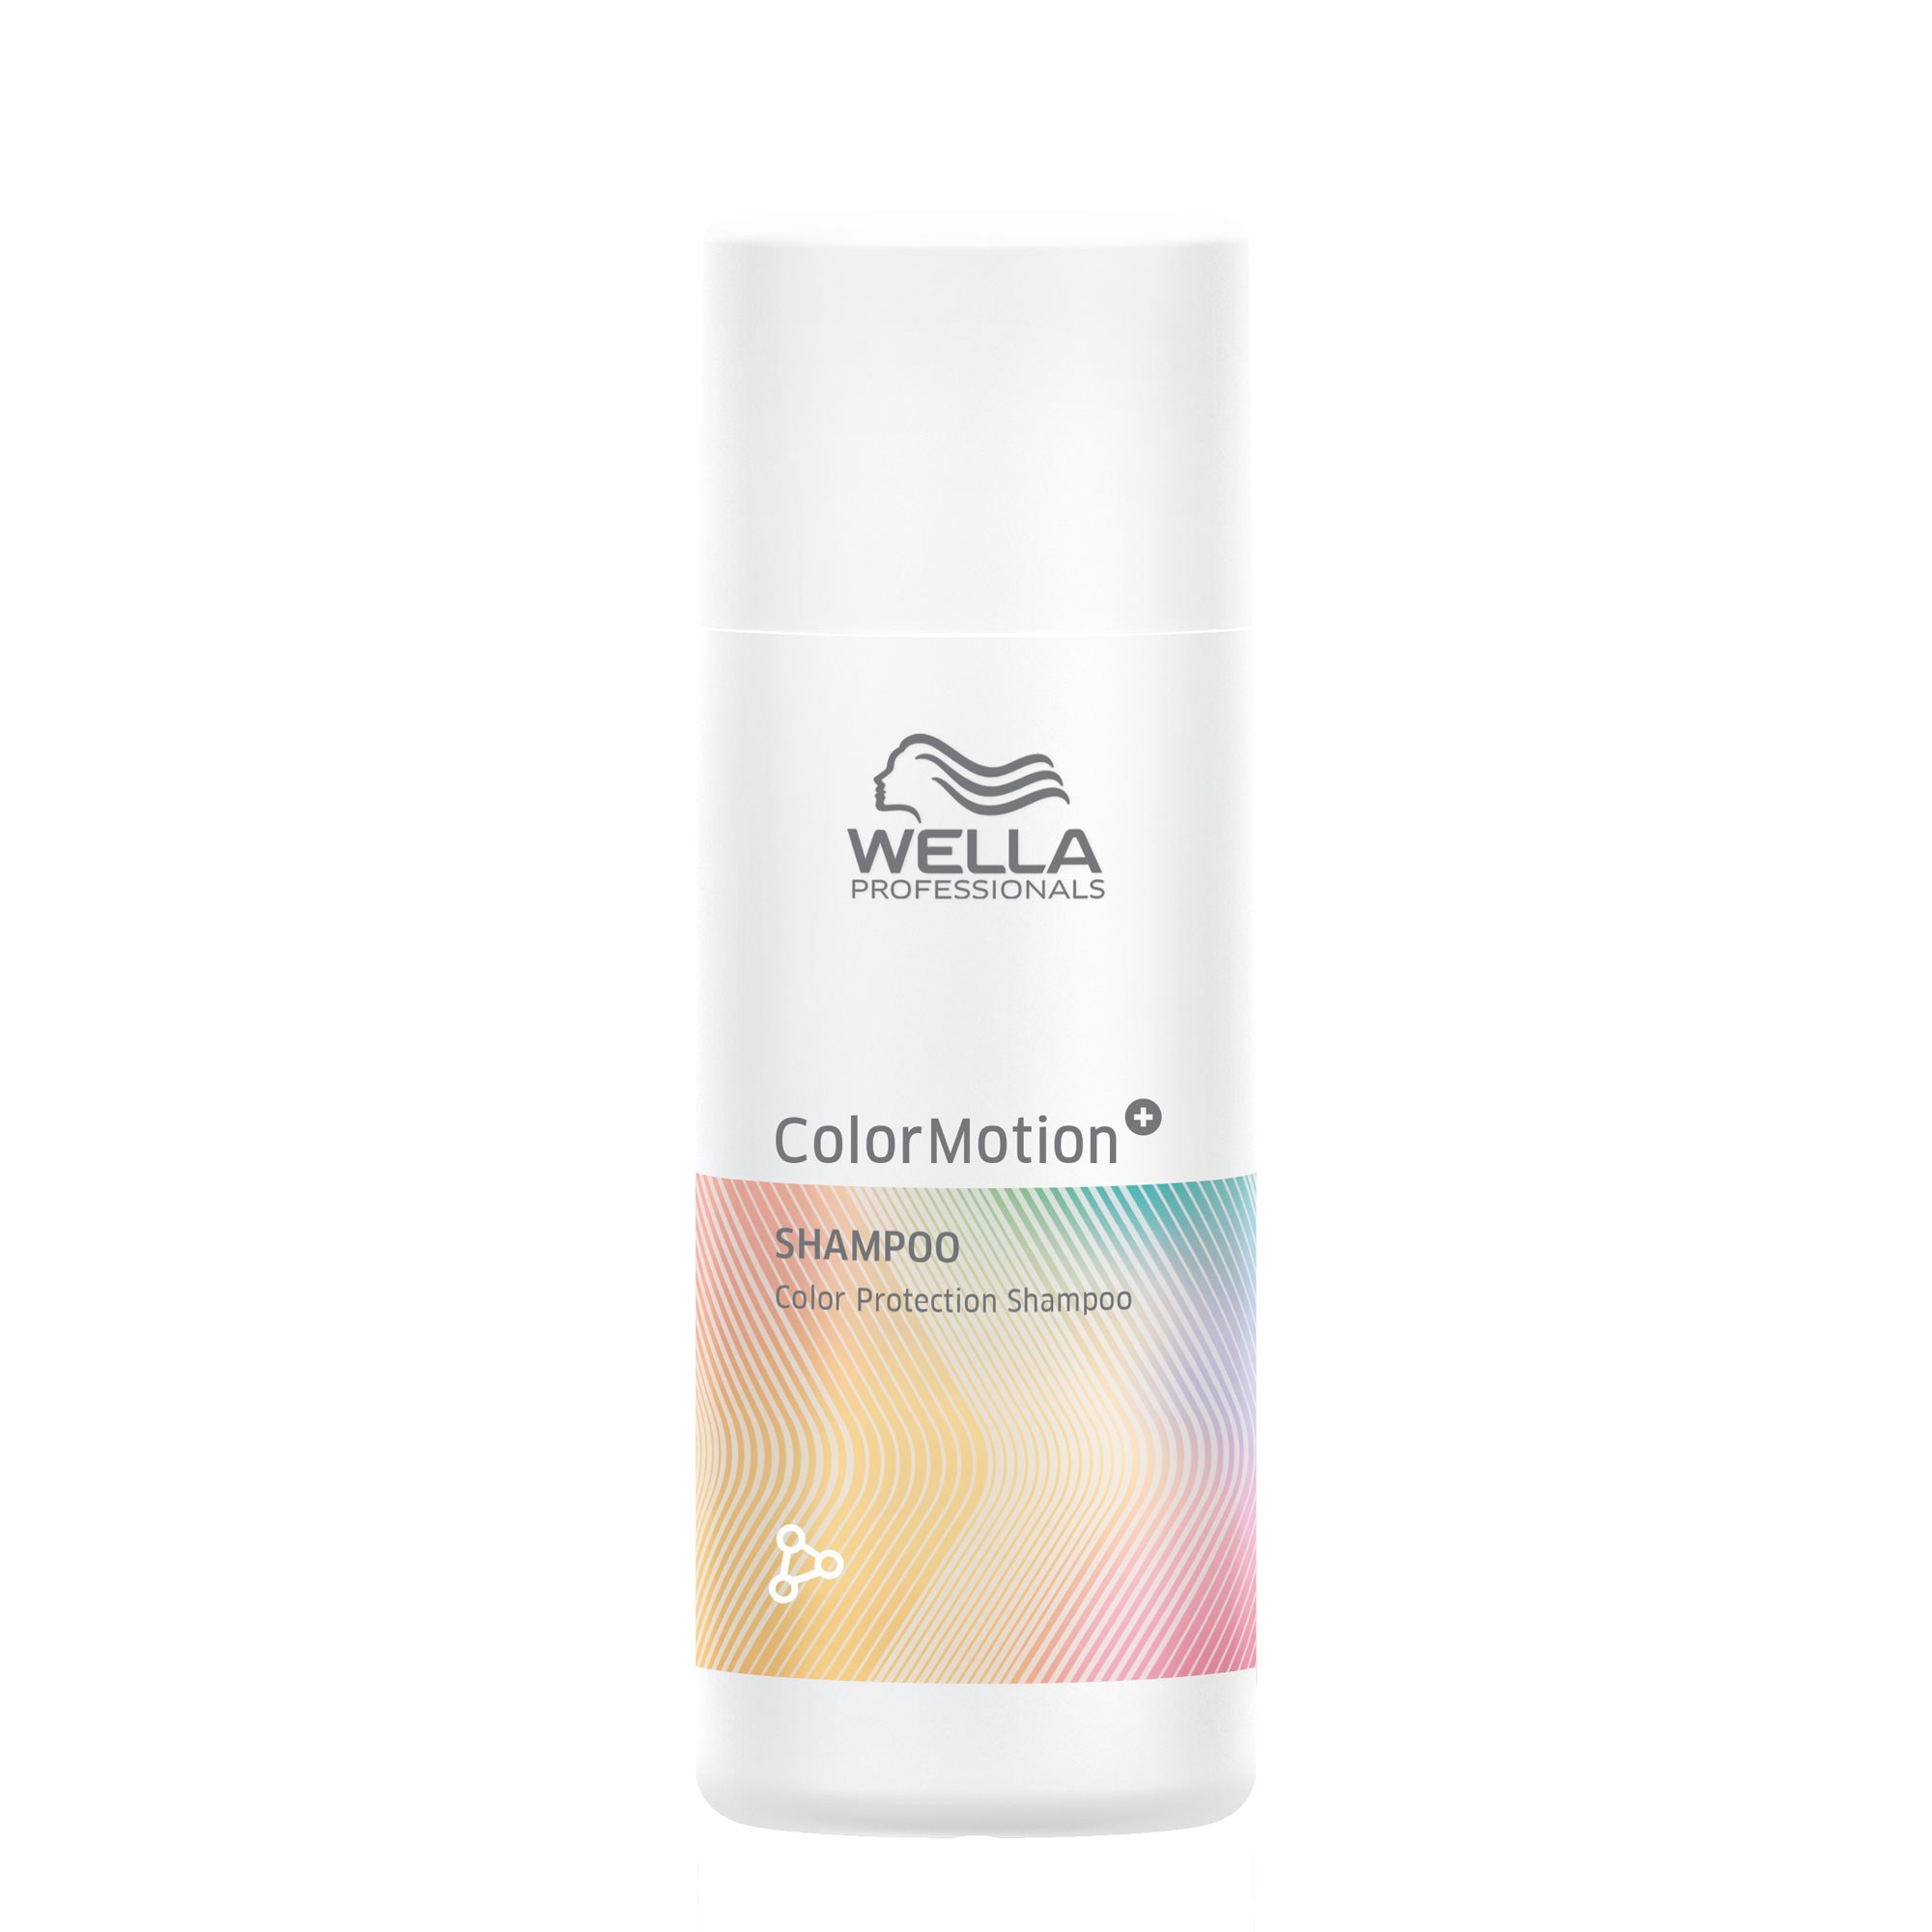 Wella ColorMotion+ Shampoo 1oz